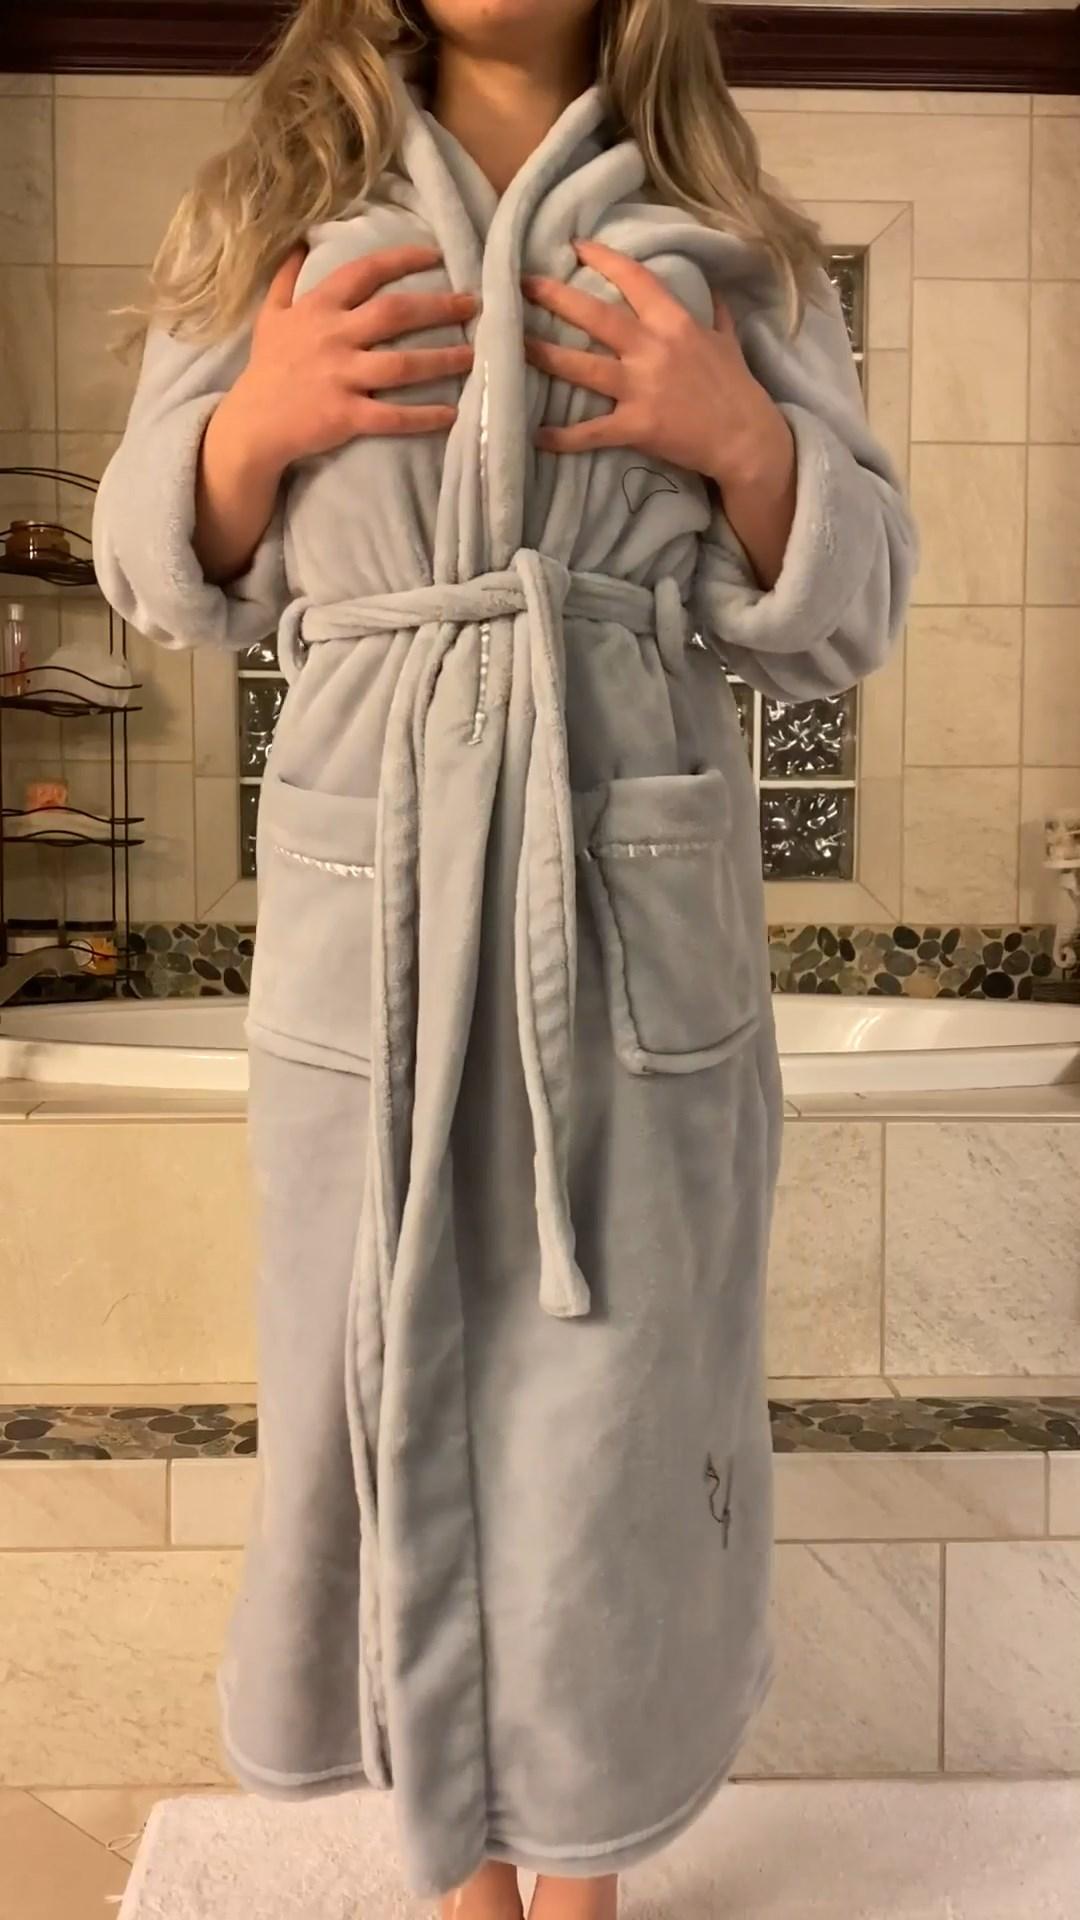 ava bamby nude bath robe striptease video leaked VMFJHV